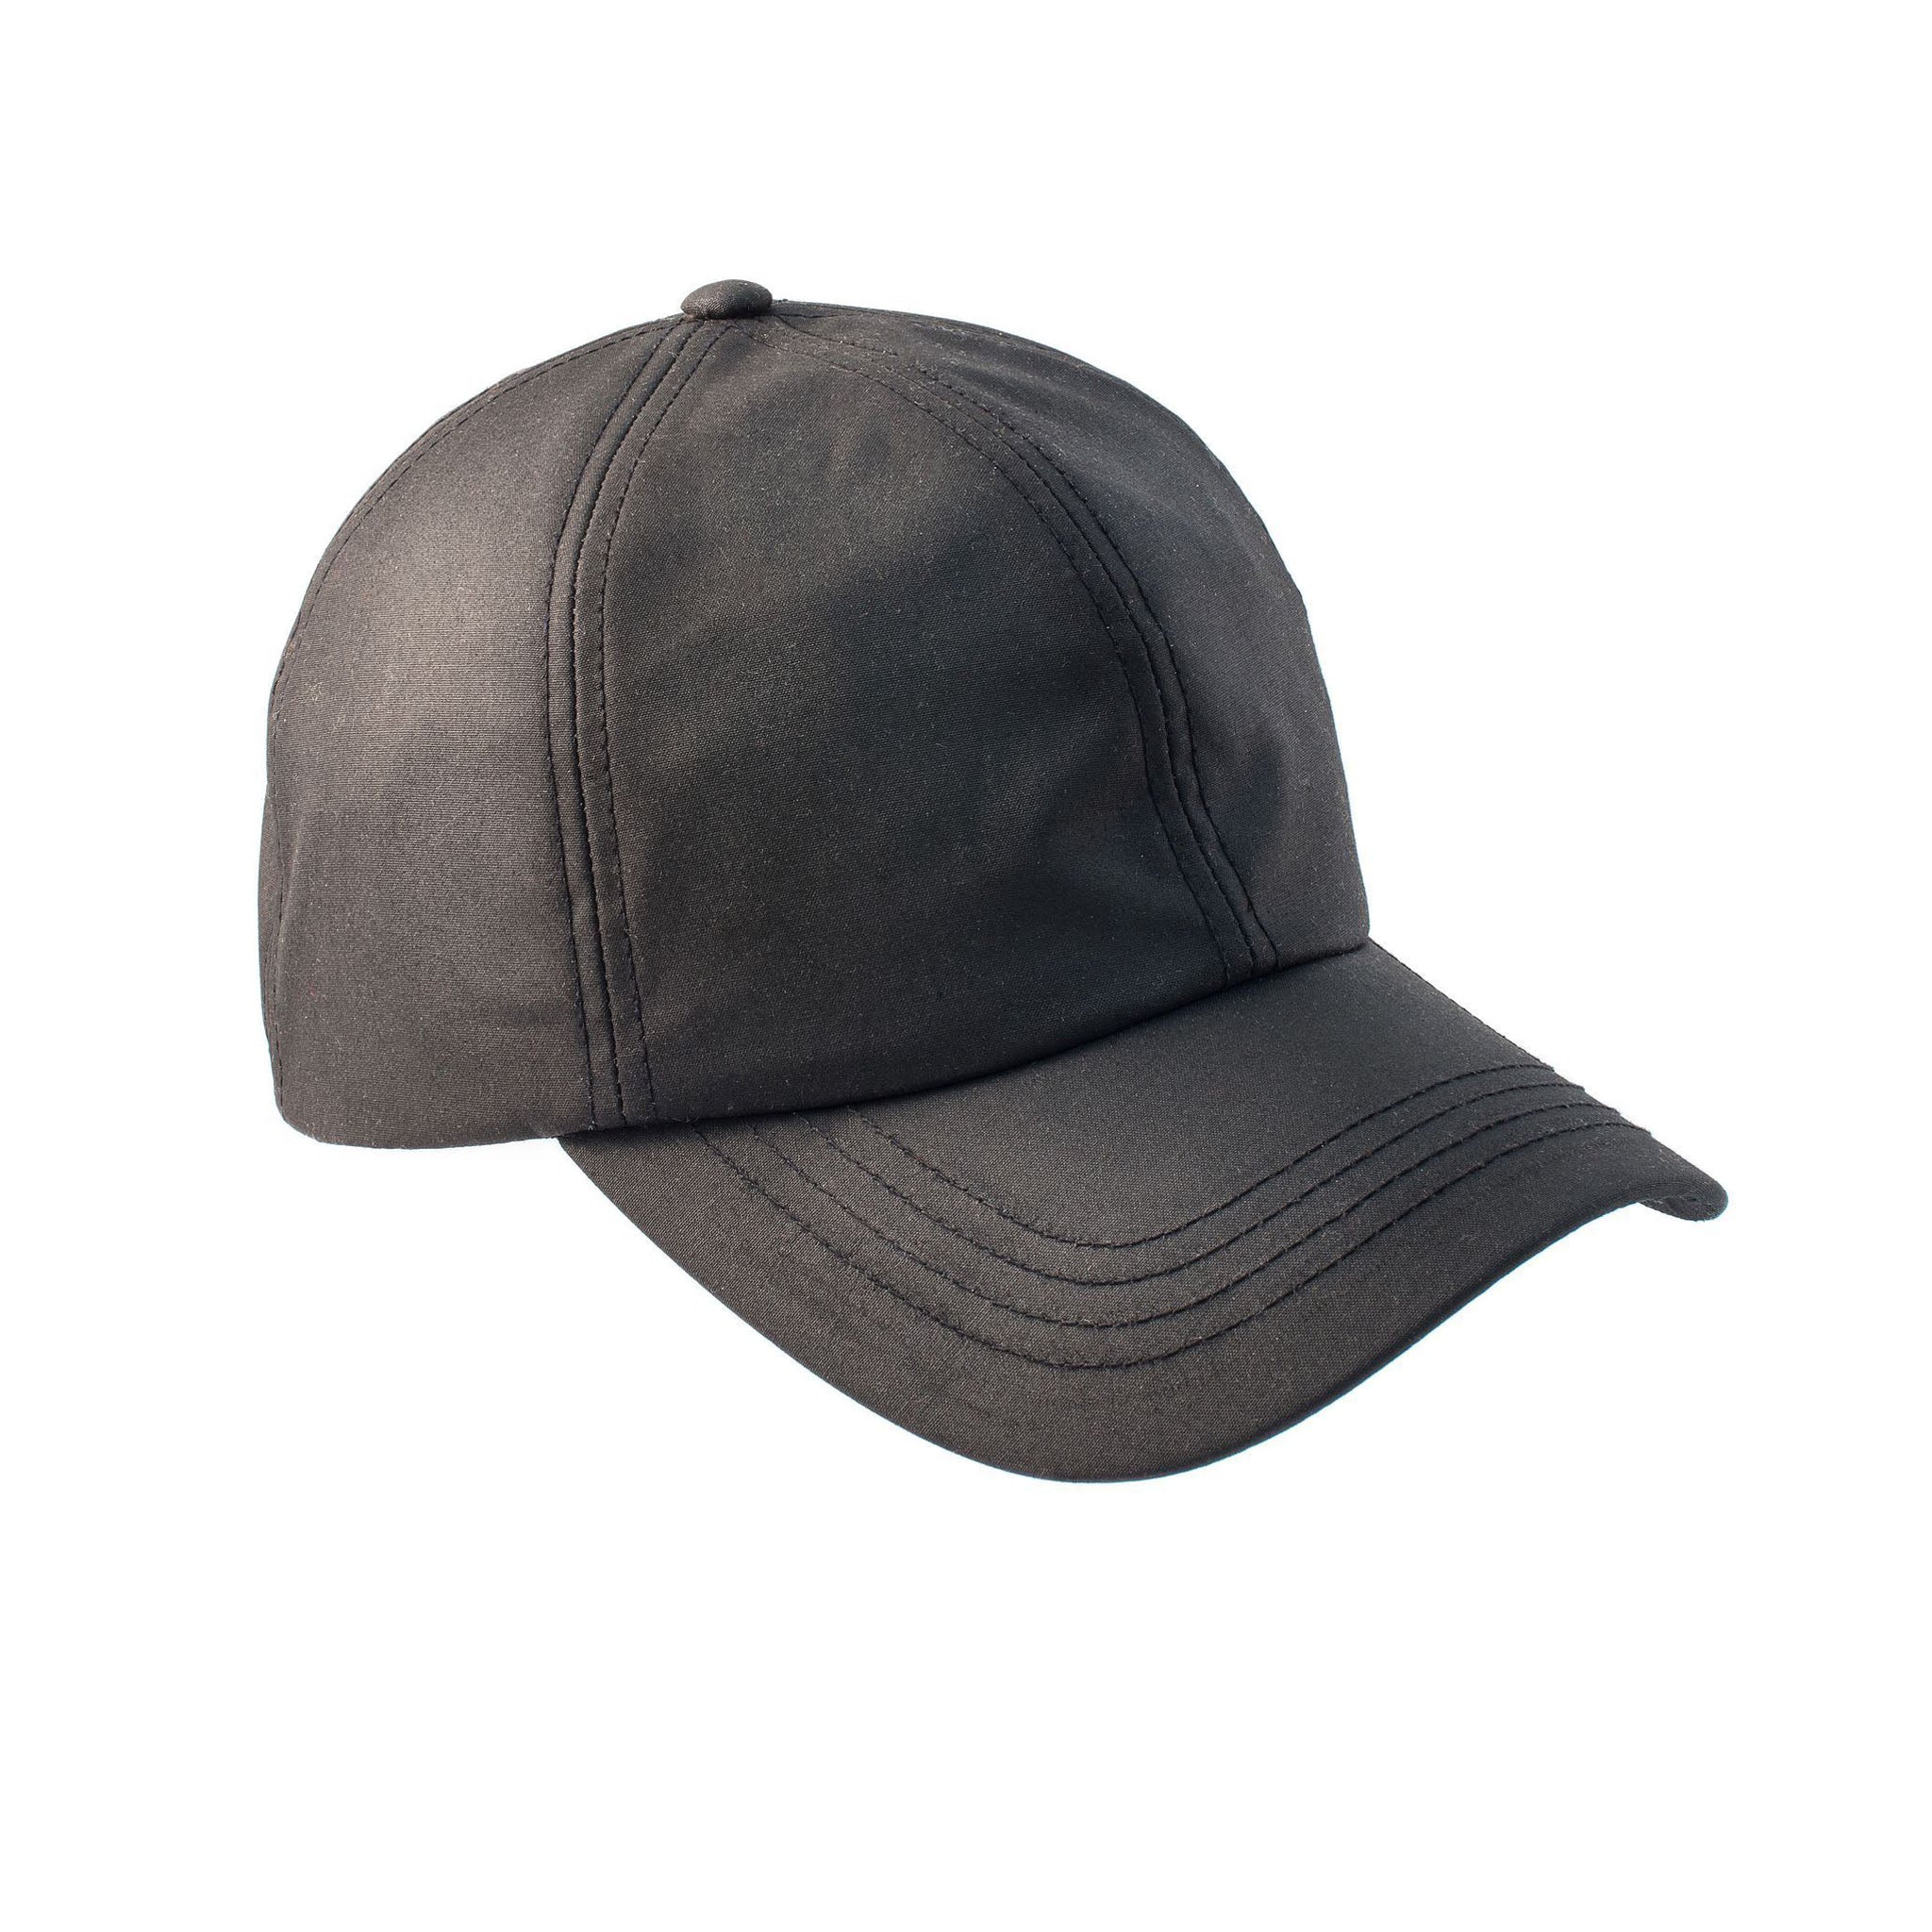 The Hat Shop British Wax Cotton Water Resistant Baseball Cap Black